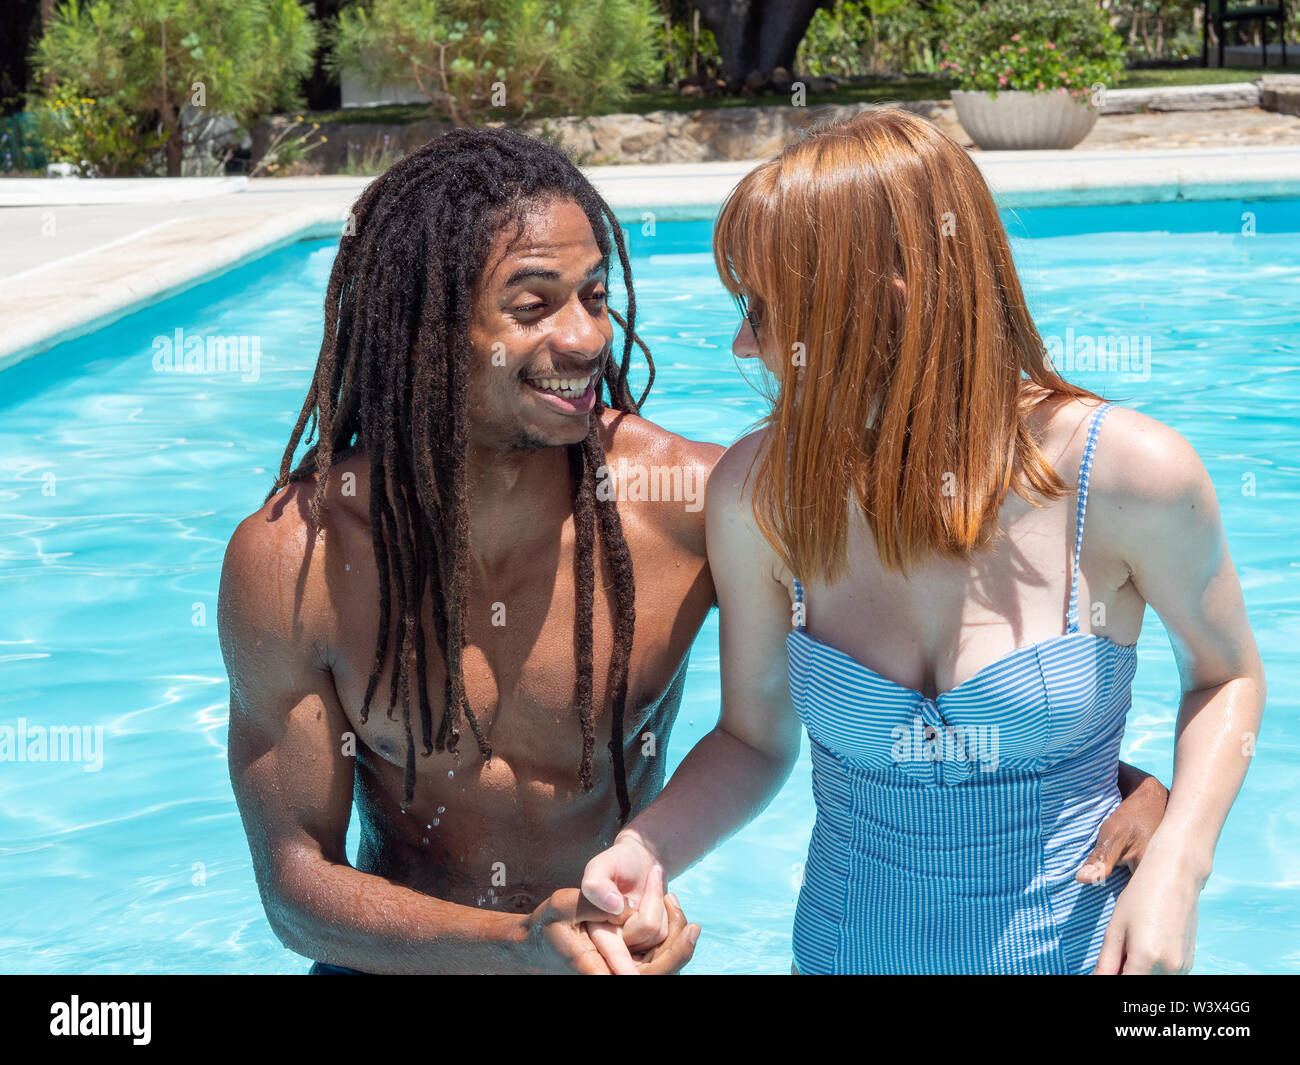 Amateur couple near a swimming pool